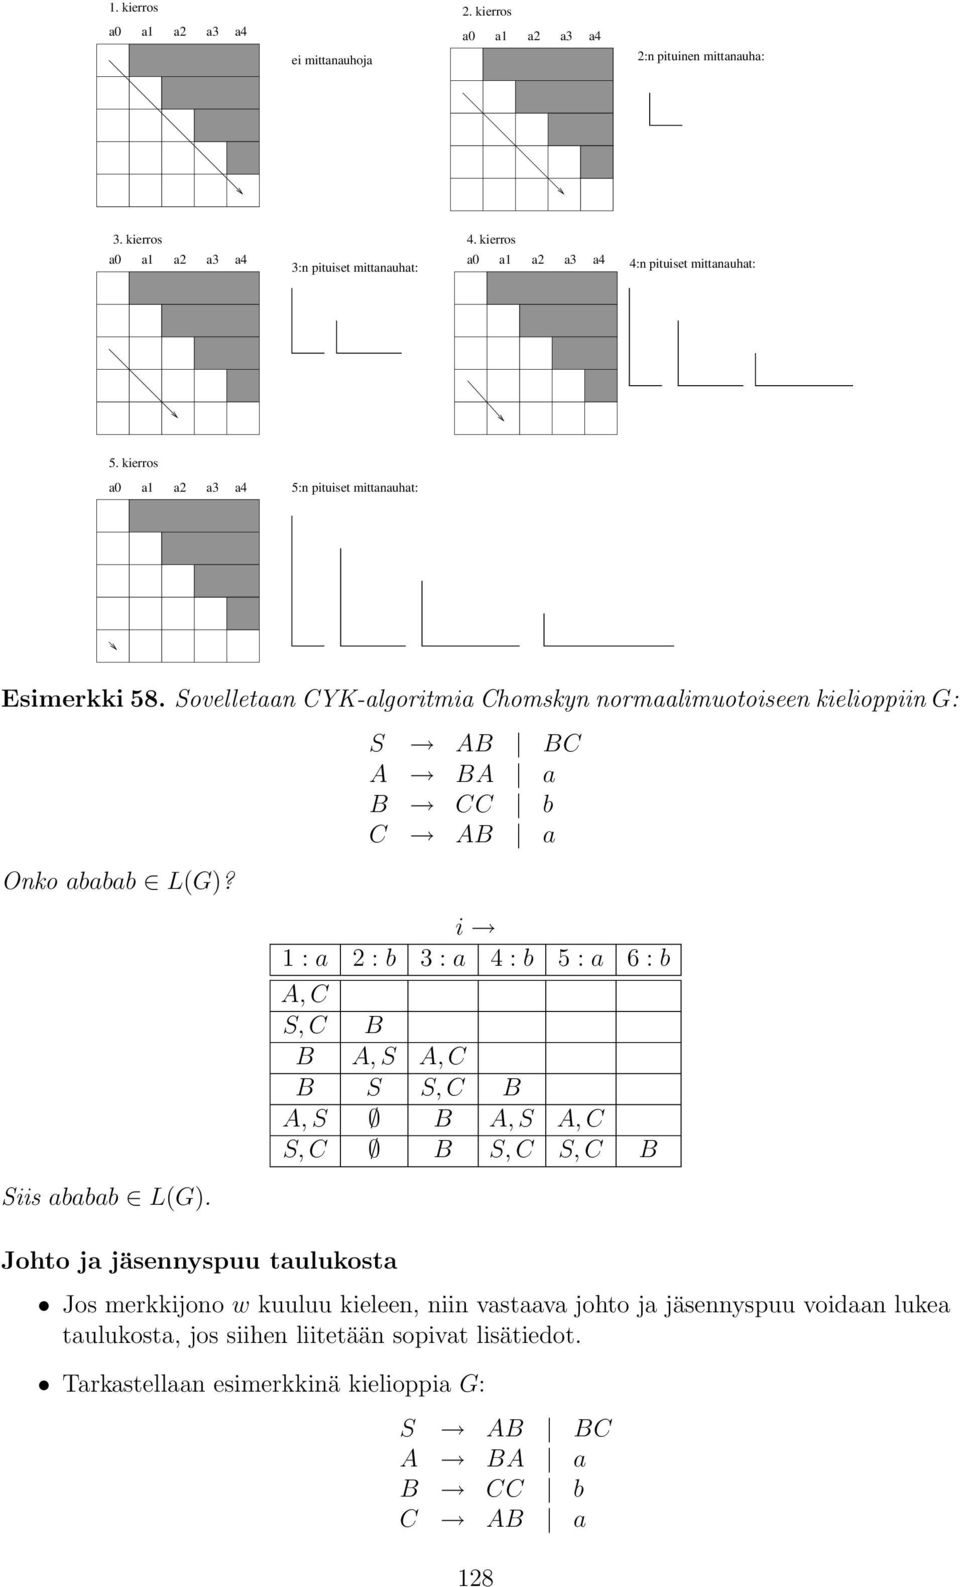 Sovelletaan CYK-algoritmia Chomskyn normaalimuotoiseen kielioppiin G: Onko ababab L(G)? Siis ababab L(G).